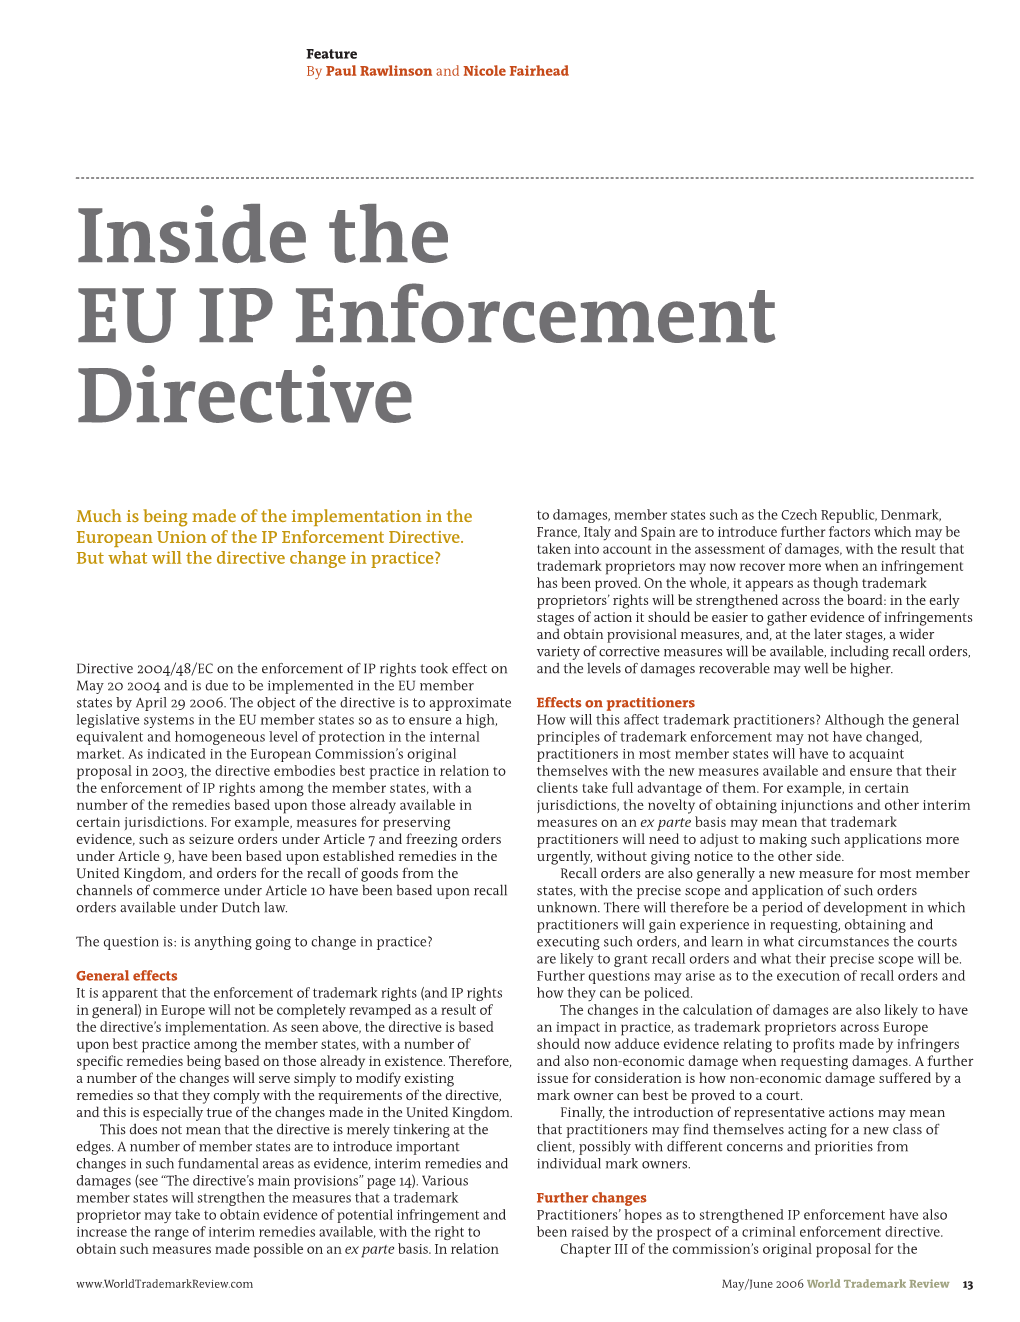 Inside the EU IP Enforcement Directive